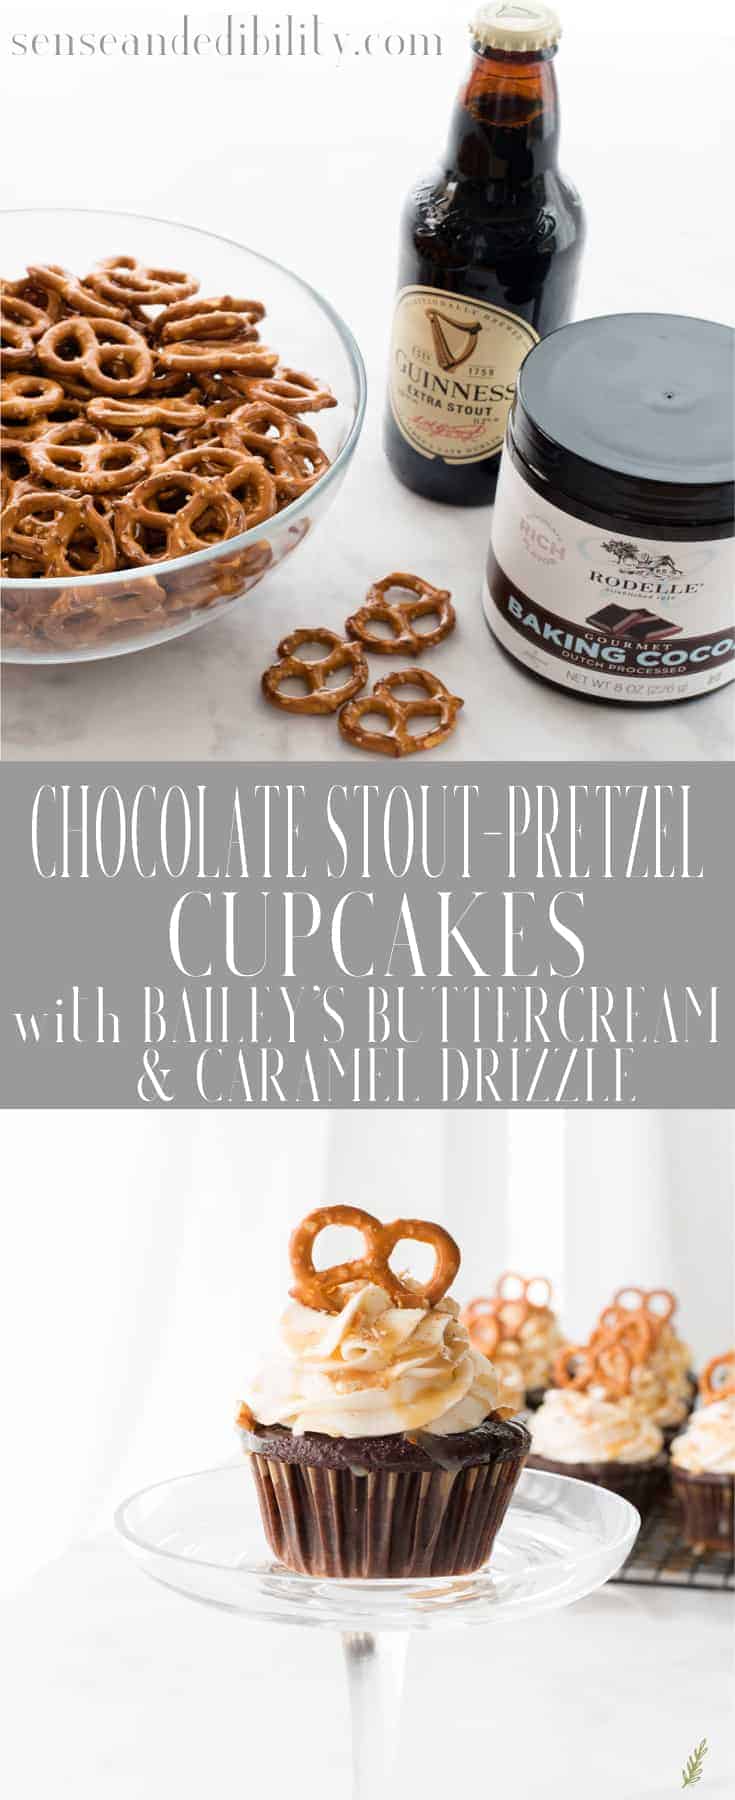 Sense & Edibility's Chocolate Stout-Pretzel Cupcakes with Bailey's Buttercream and Caramel Drizzle Pin